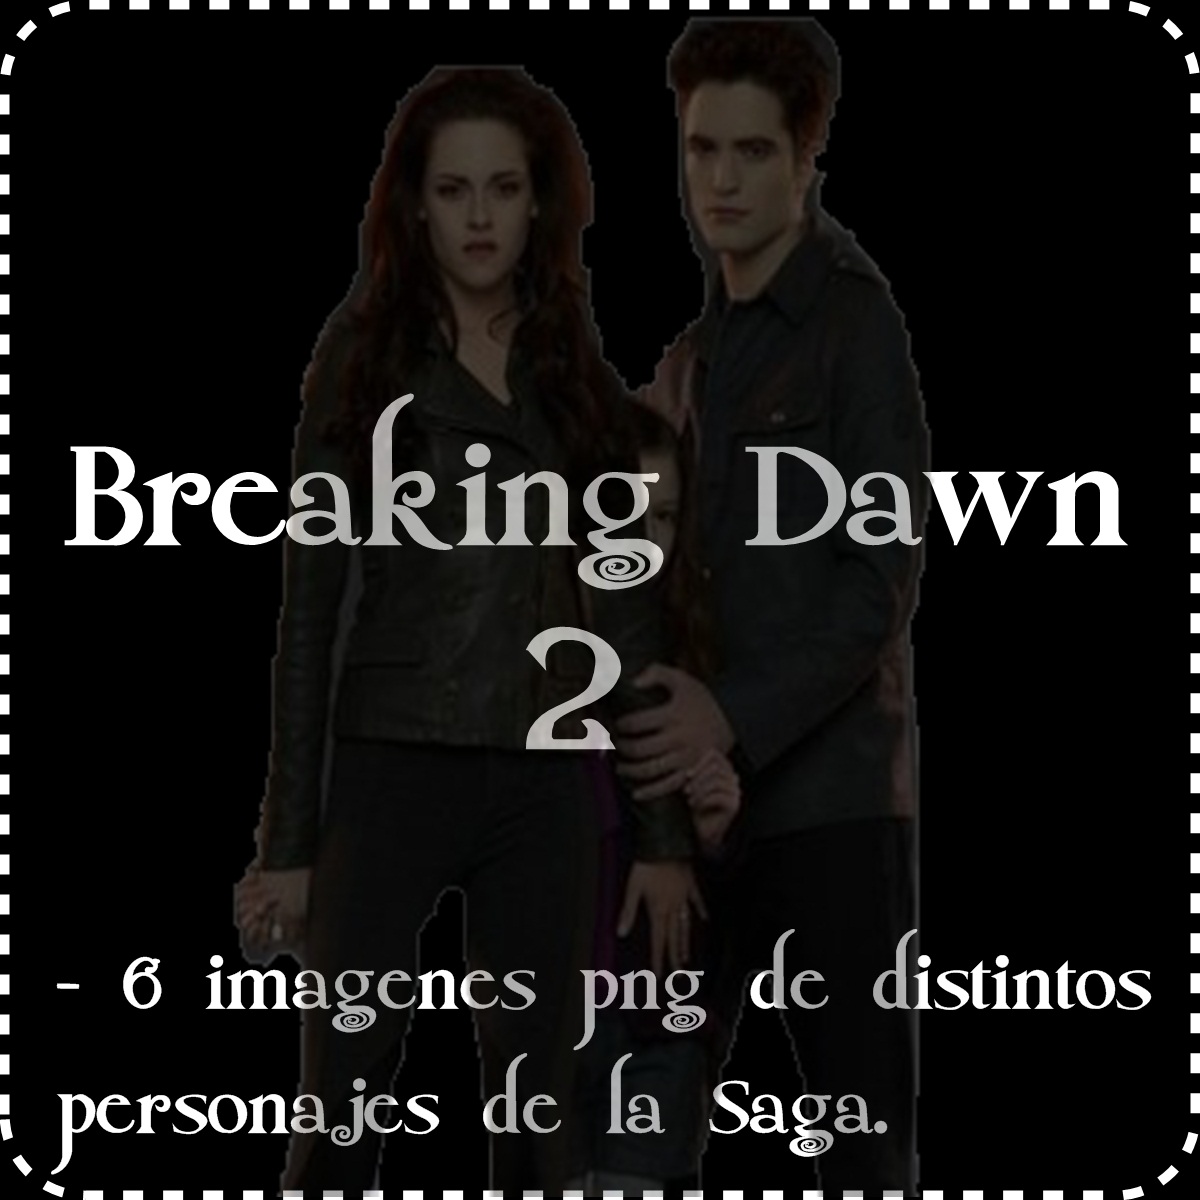 Pack 6 imagenes png de Breaking Dawn 2.